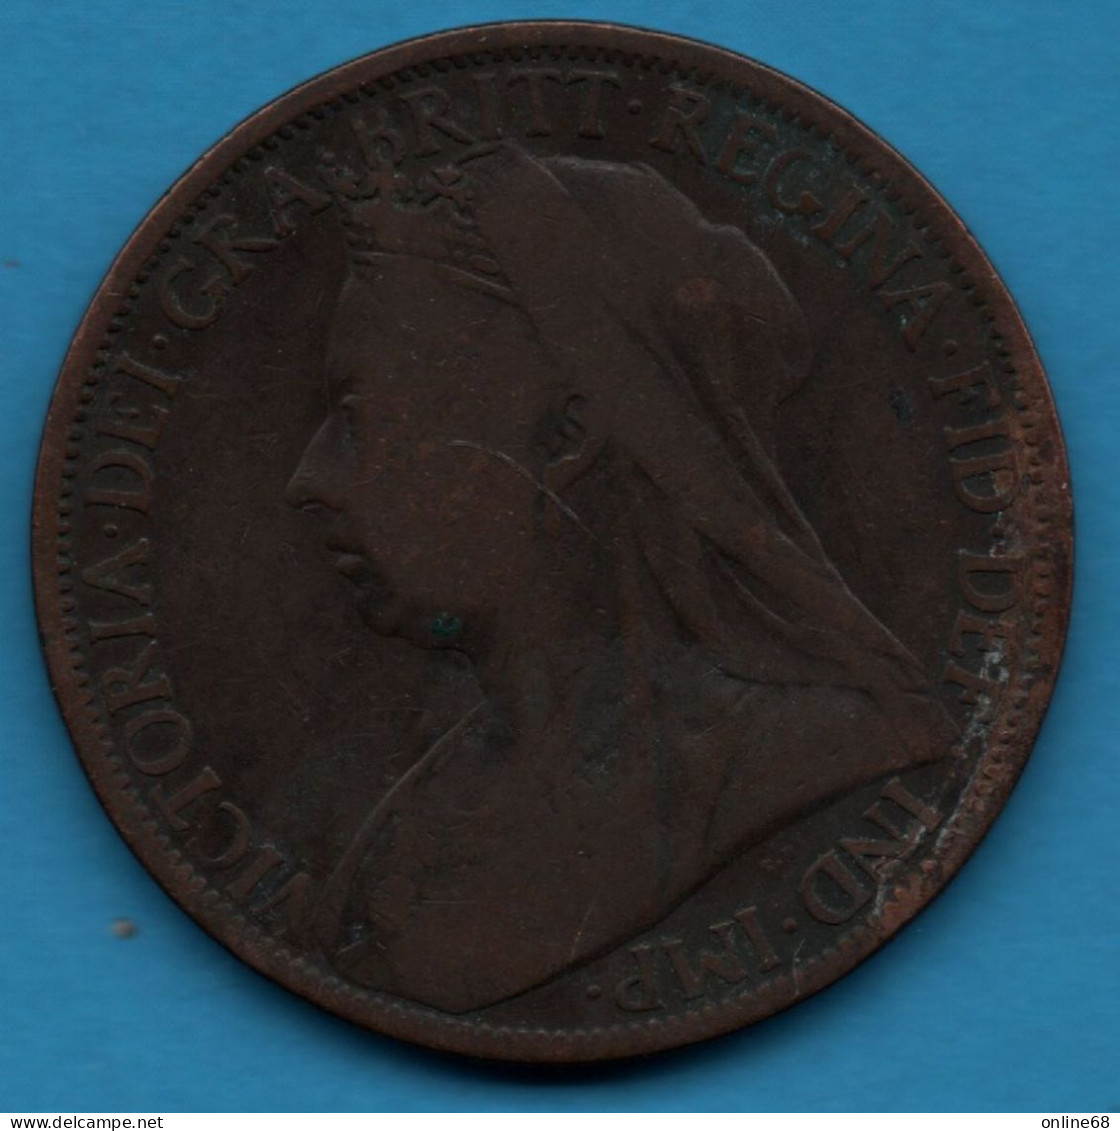 UK 1 PENNY 1899 KM# 790 VICTORIA - D. 1 Penny